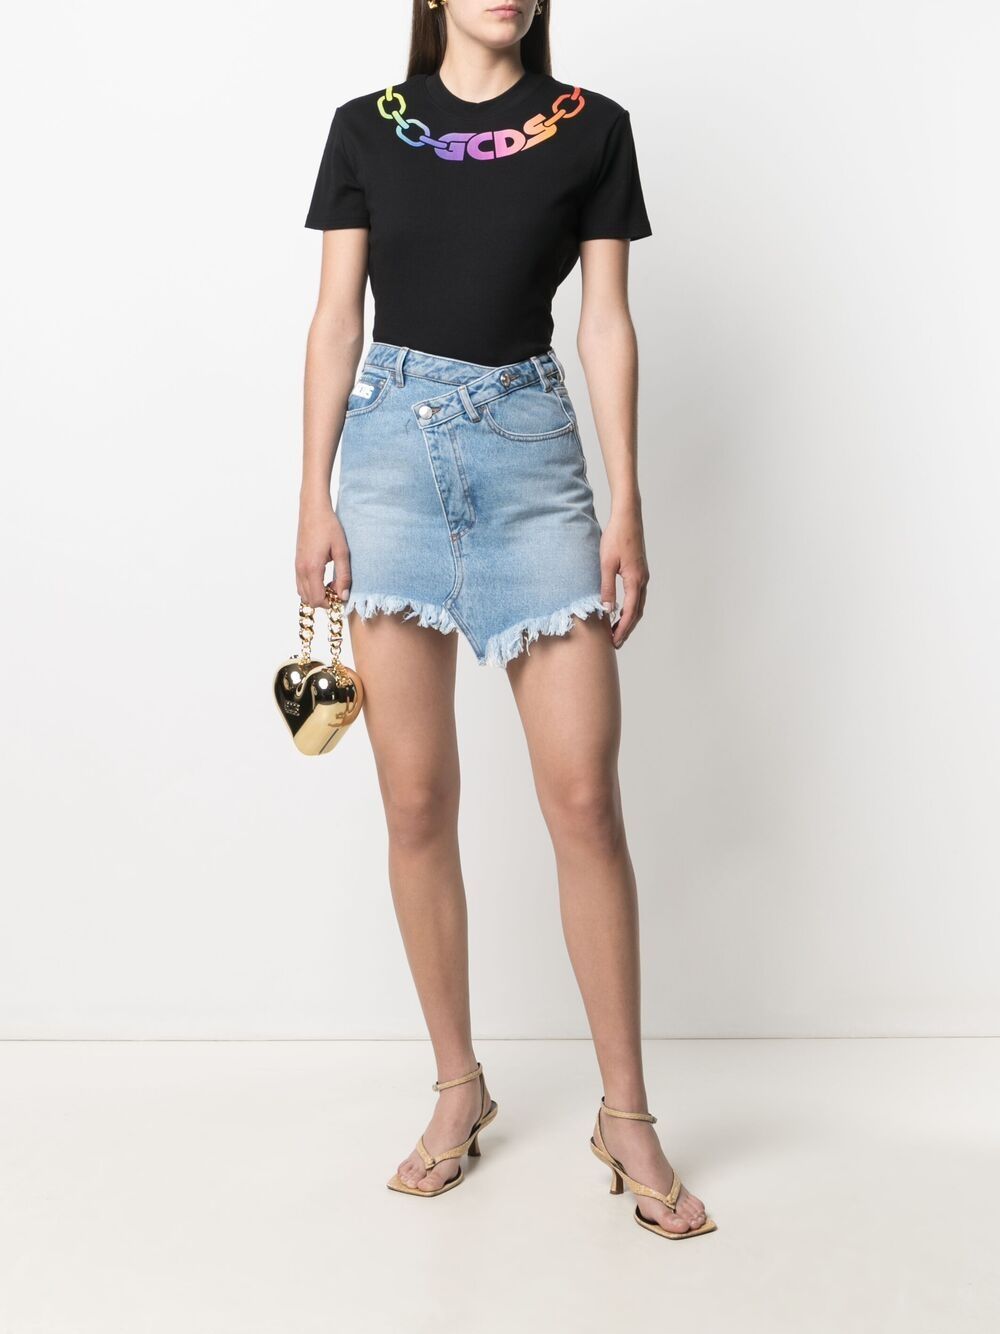 фото Gcds джинсовая юбка мини асимметричного кроя